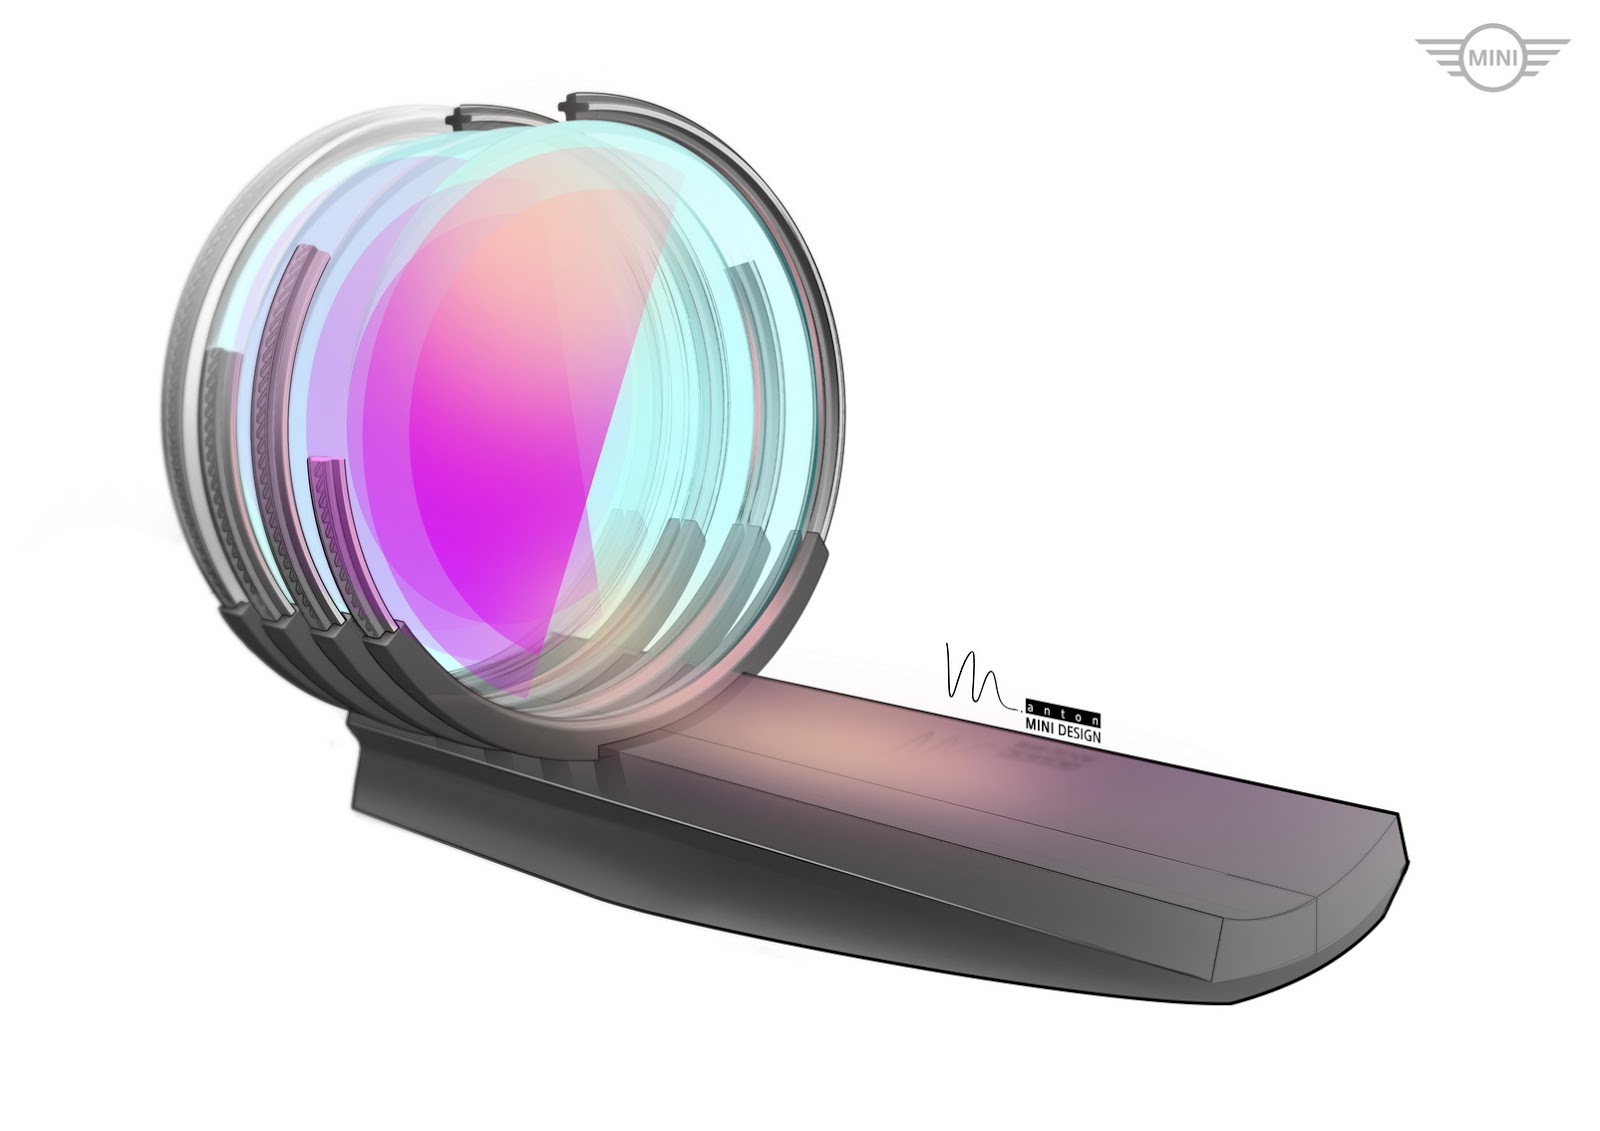 Mini Vision Next 100 Concept, 2016 - Design Sketch